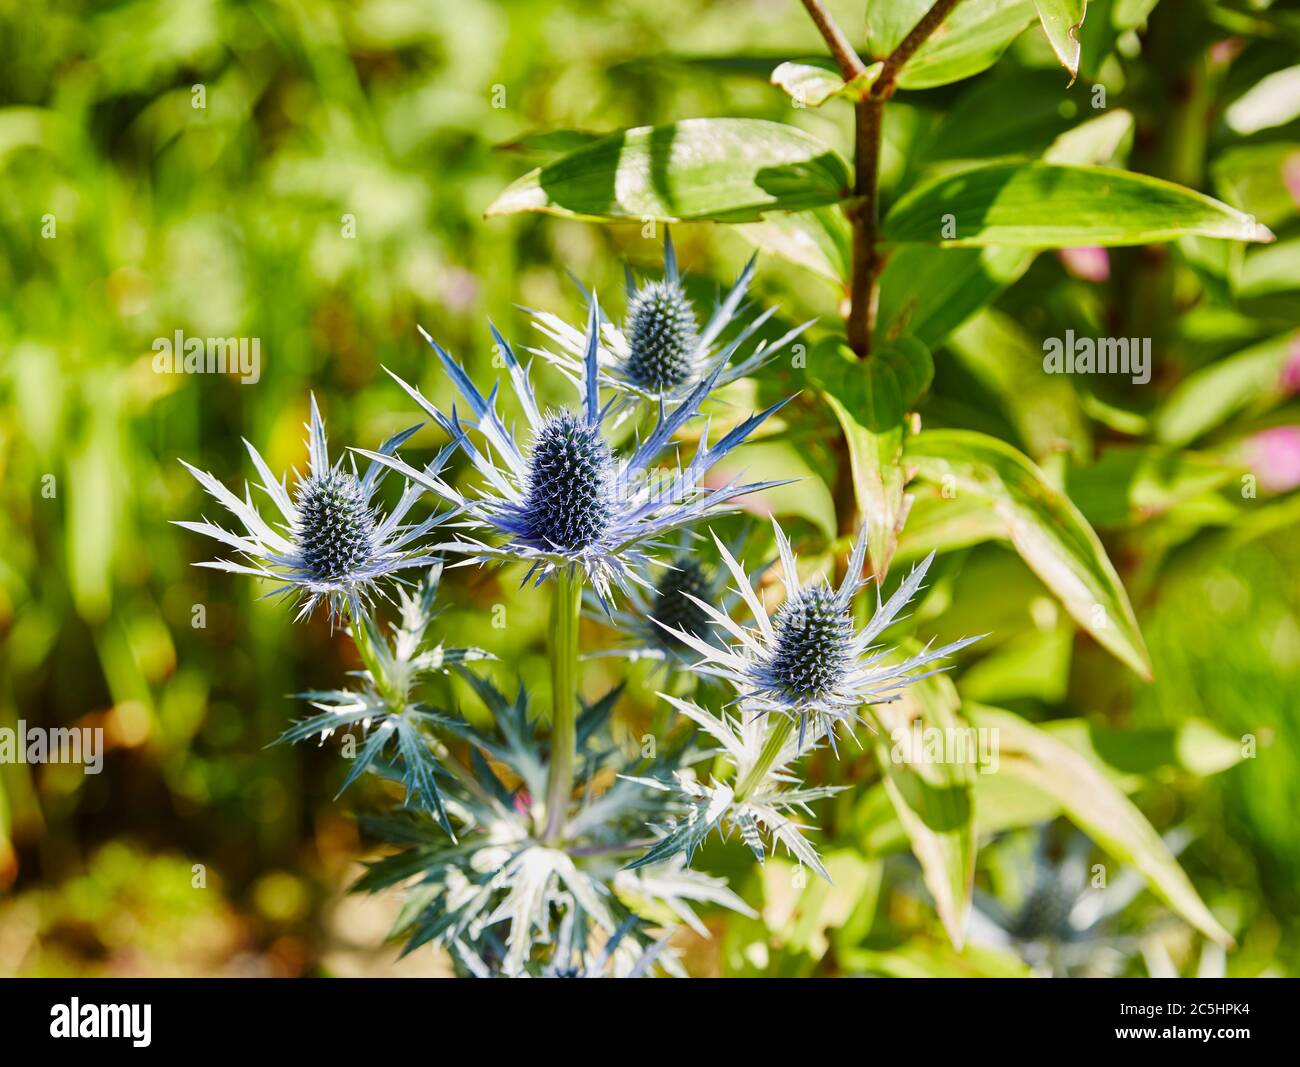 Eryngium or a Blue Holly in a garden setting. Stock Photo